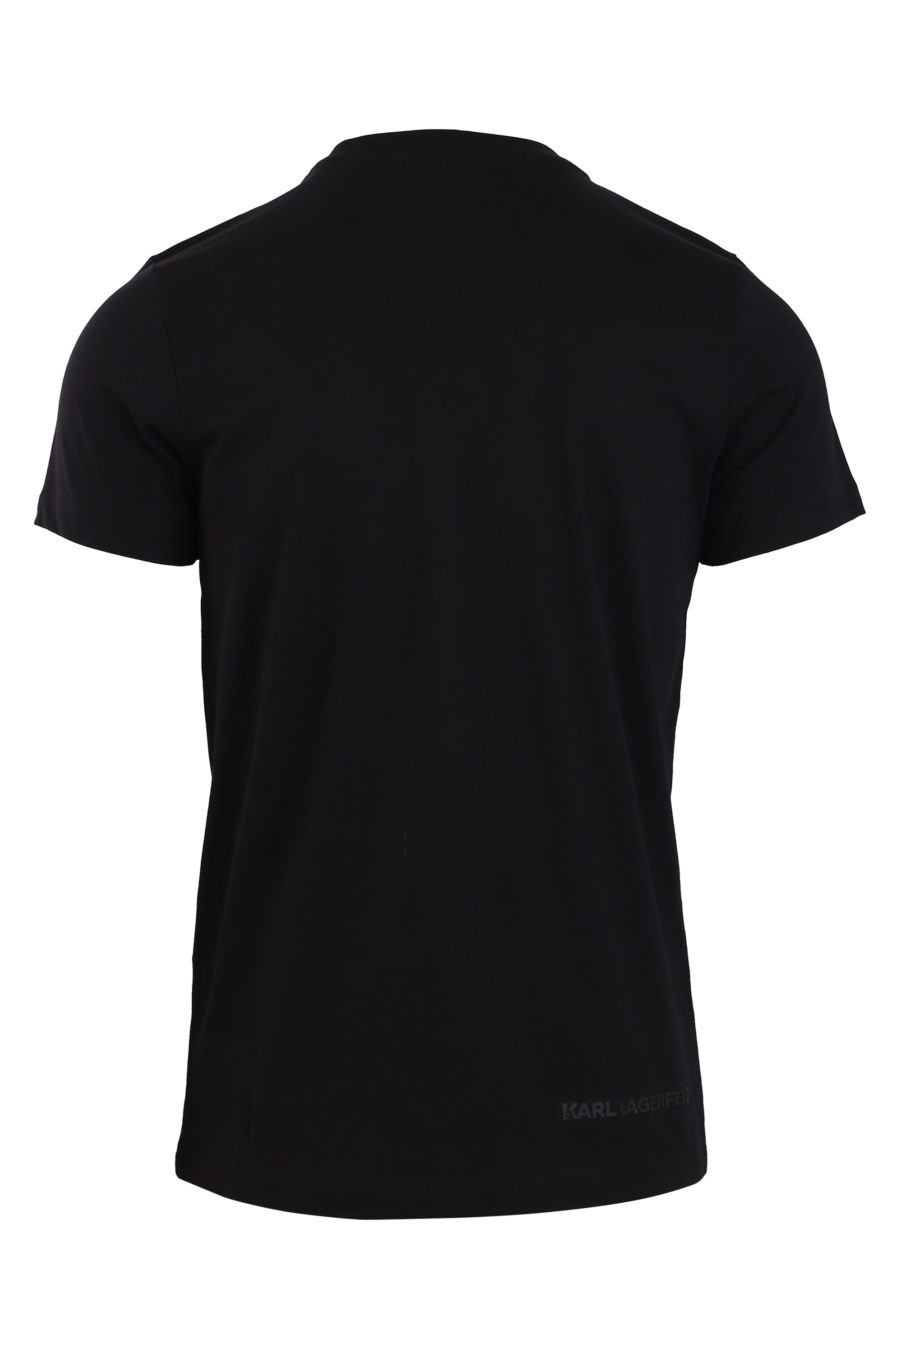 Schwarzes T-Shirt mit blauem Maxi-Logo - IMG 0828